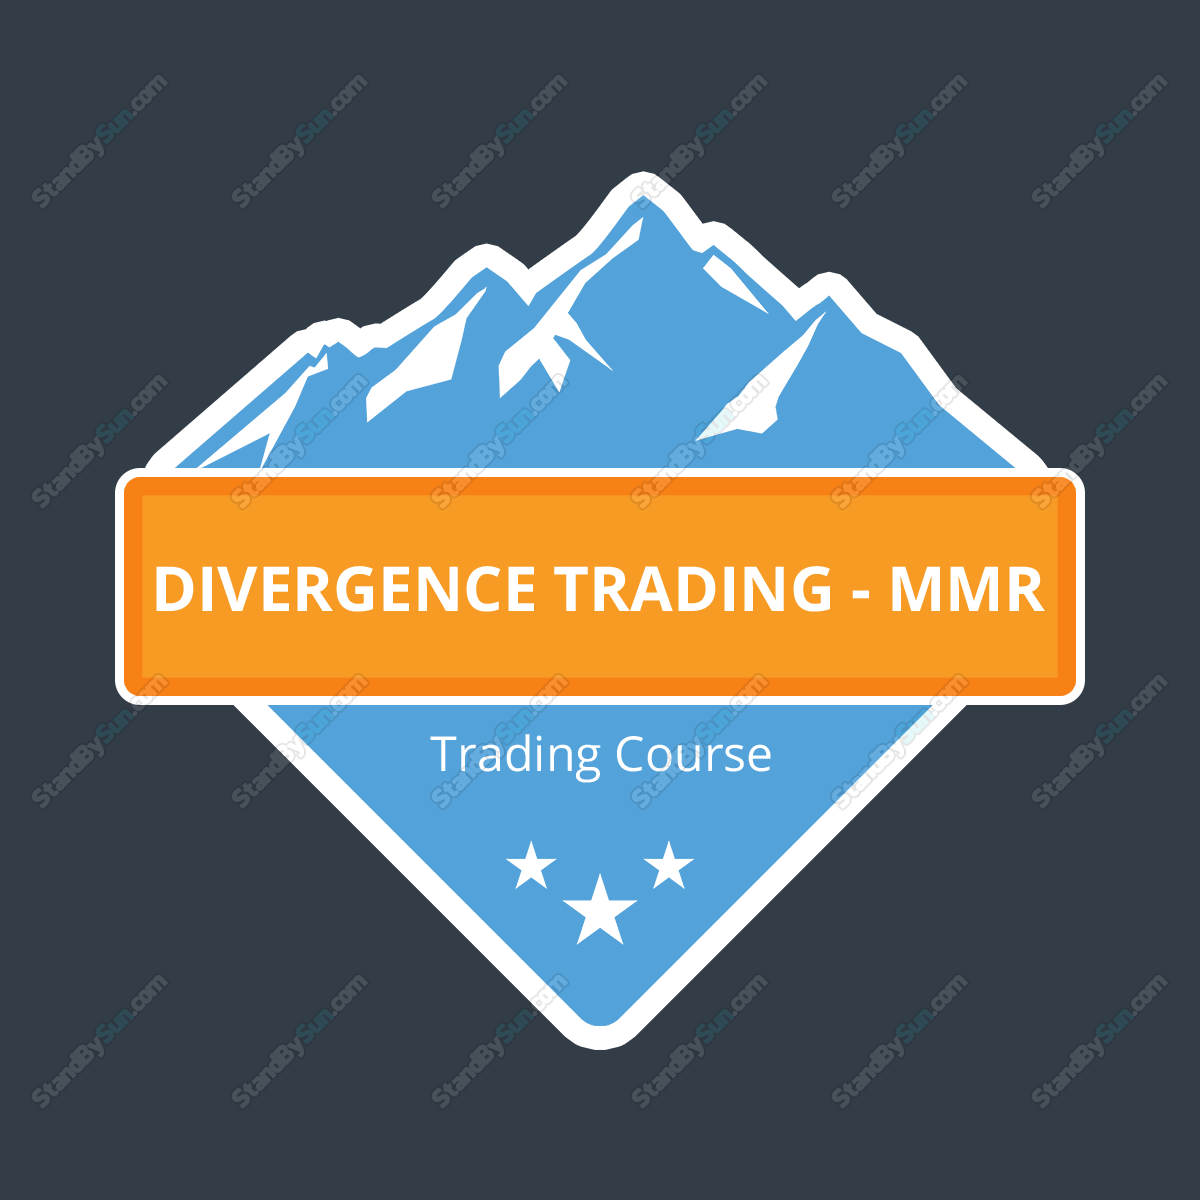 Divergence Trading - Mastering Market Reversals